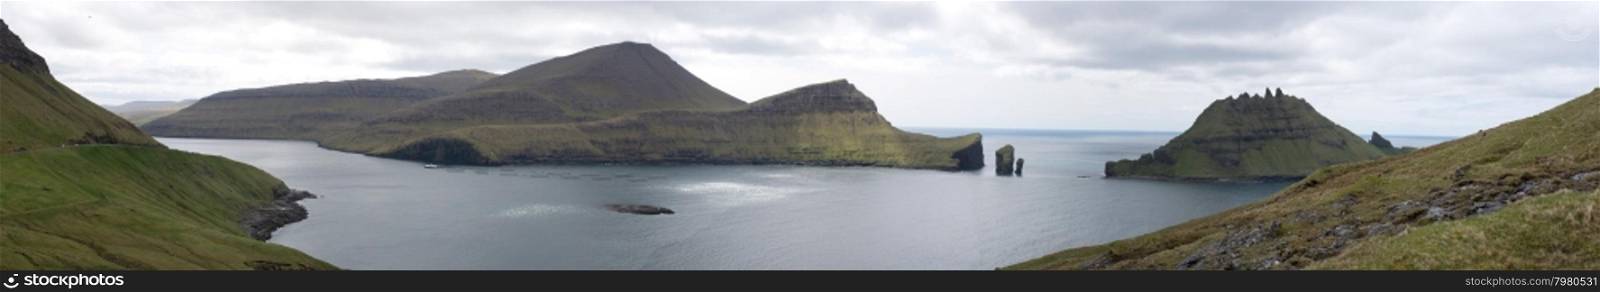 Panorama of Vagar and Tindholmur. Panorama of Vagar and Tindholmur on the Faroe Islands with salmon farm